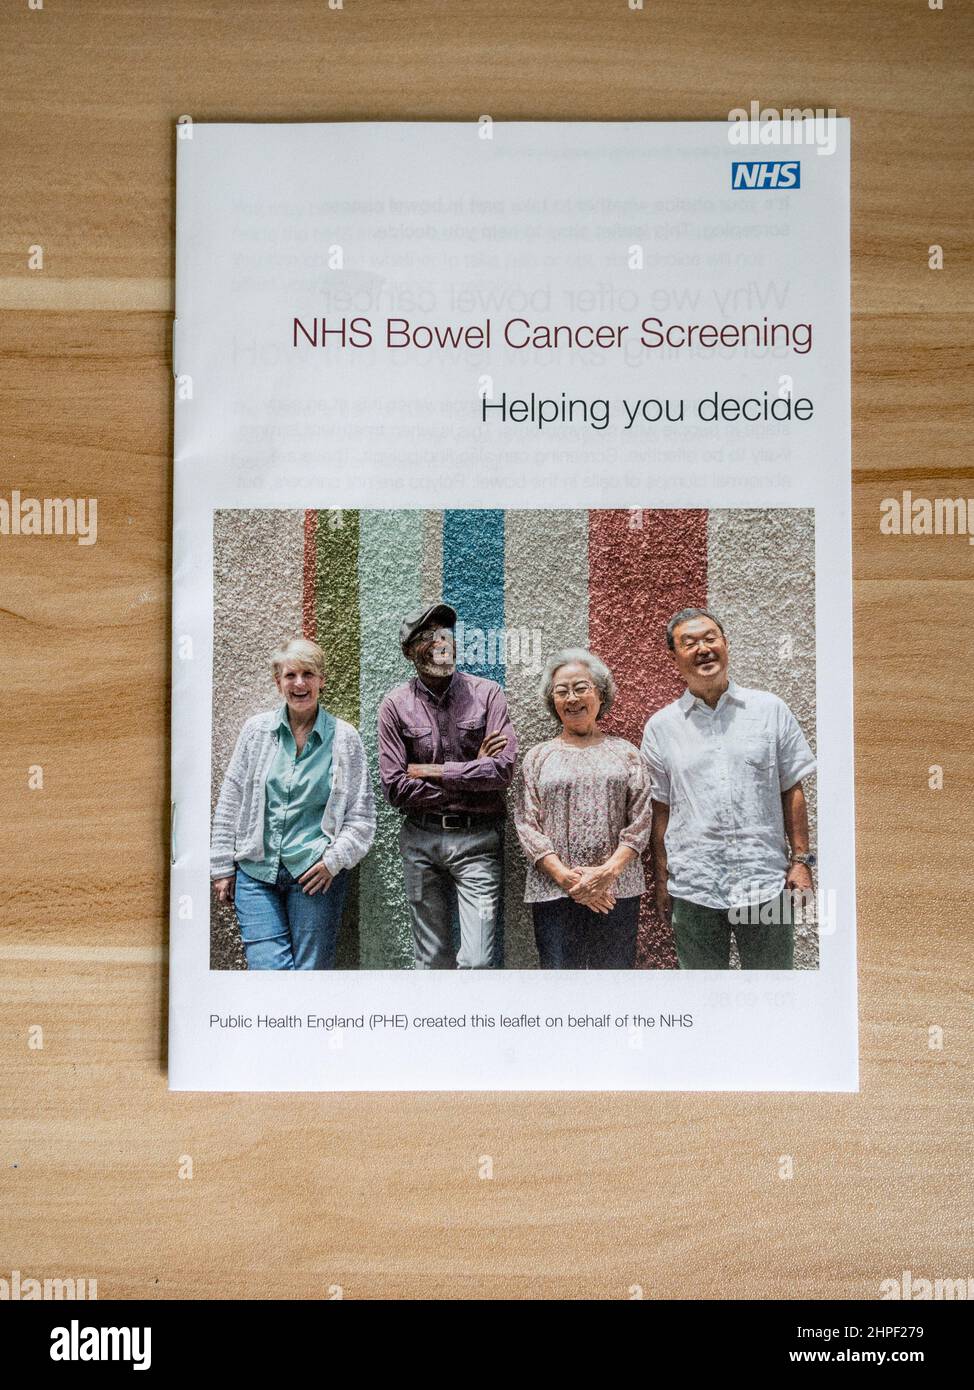 NHS bowel cancer screening programme - information leaflet, helping you decide. Stock Photo